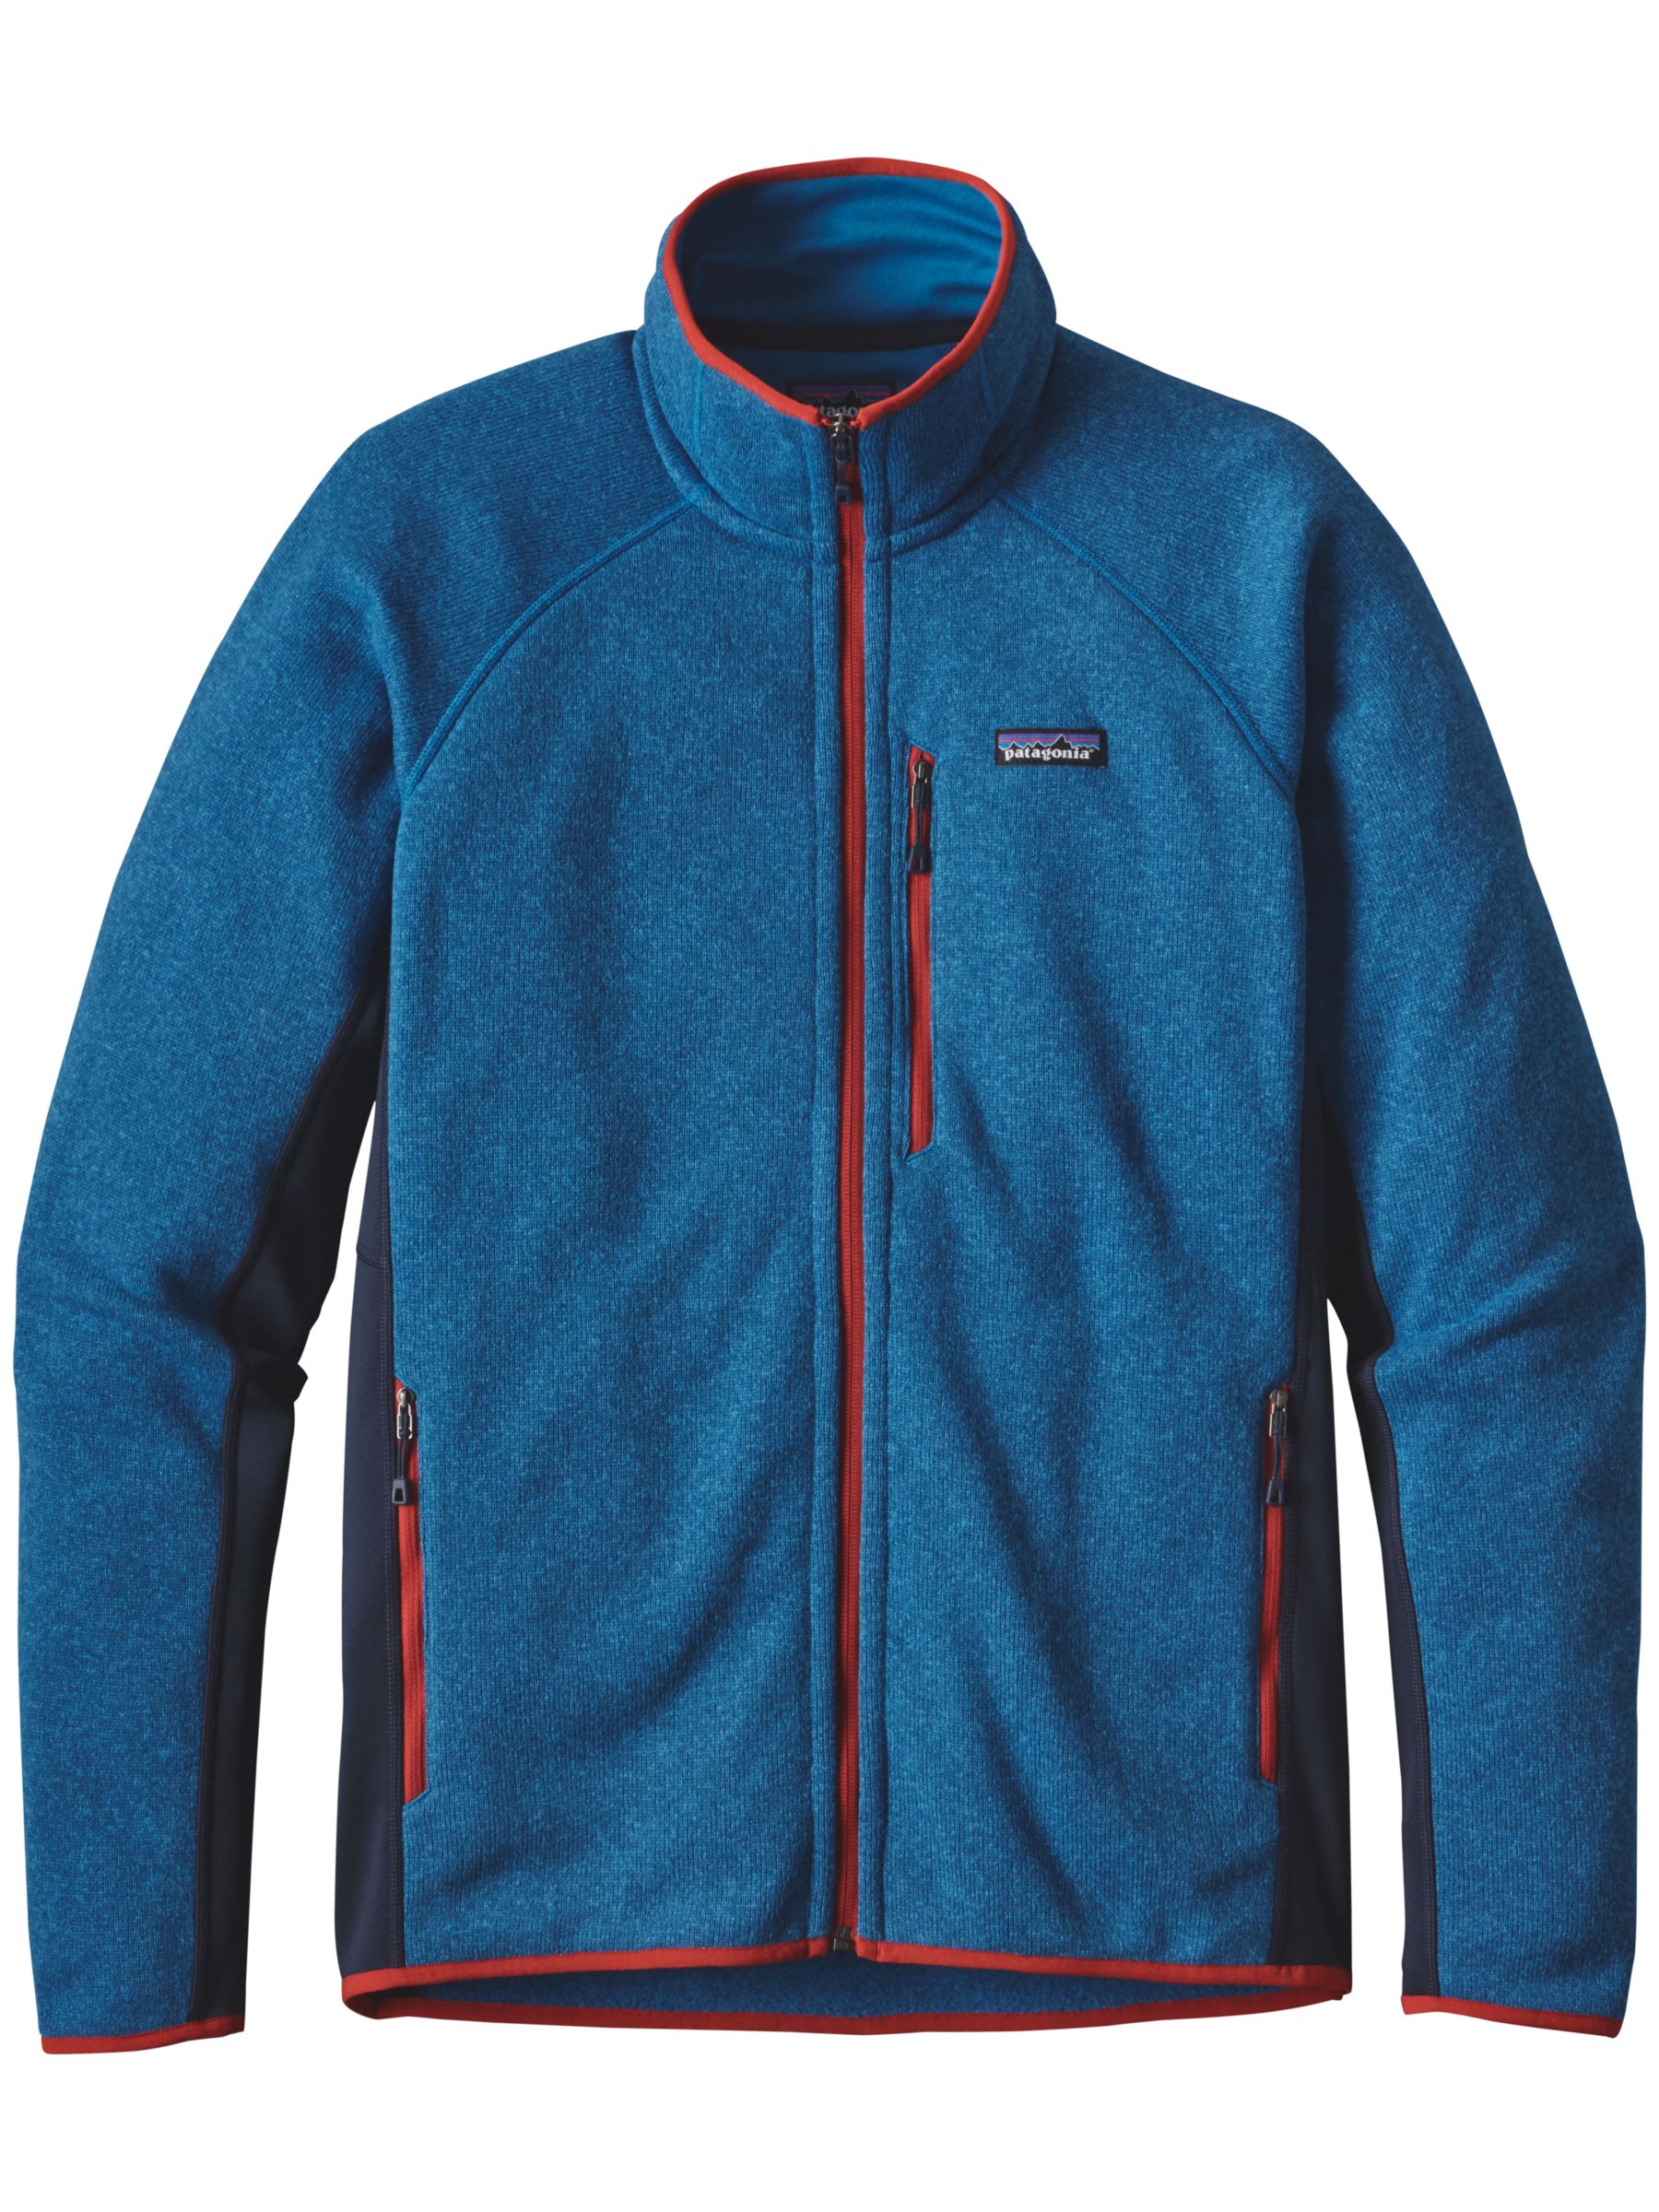 Patagonia Better Sweater Hoody - Fleece Jacket Women's, Free UK Delivery